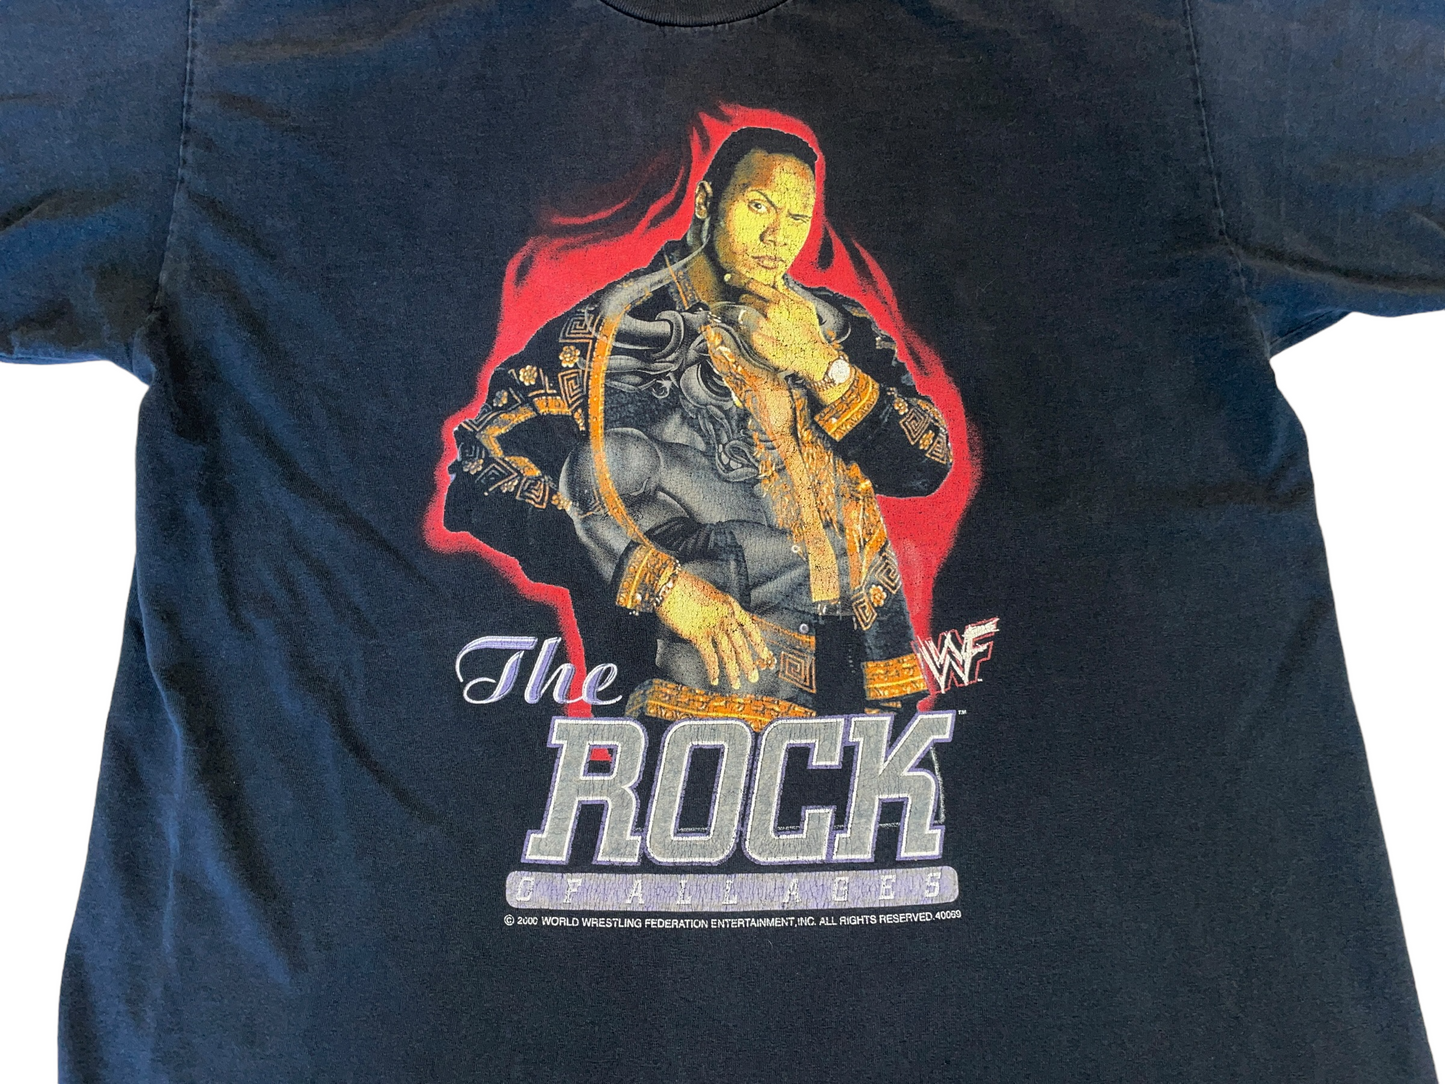 Vintage 2000 The Rock T-Shirt